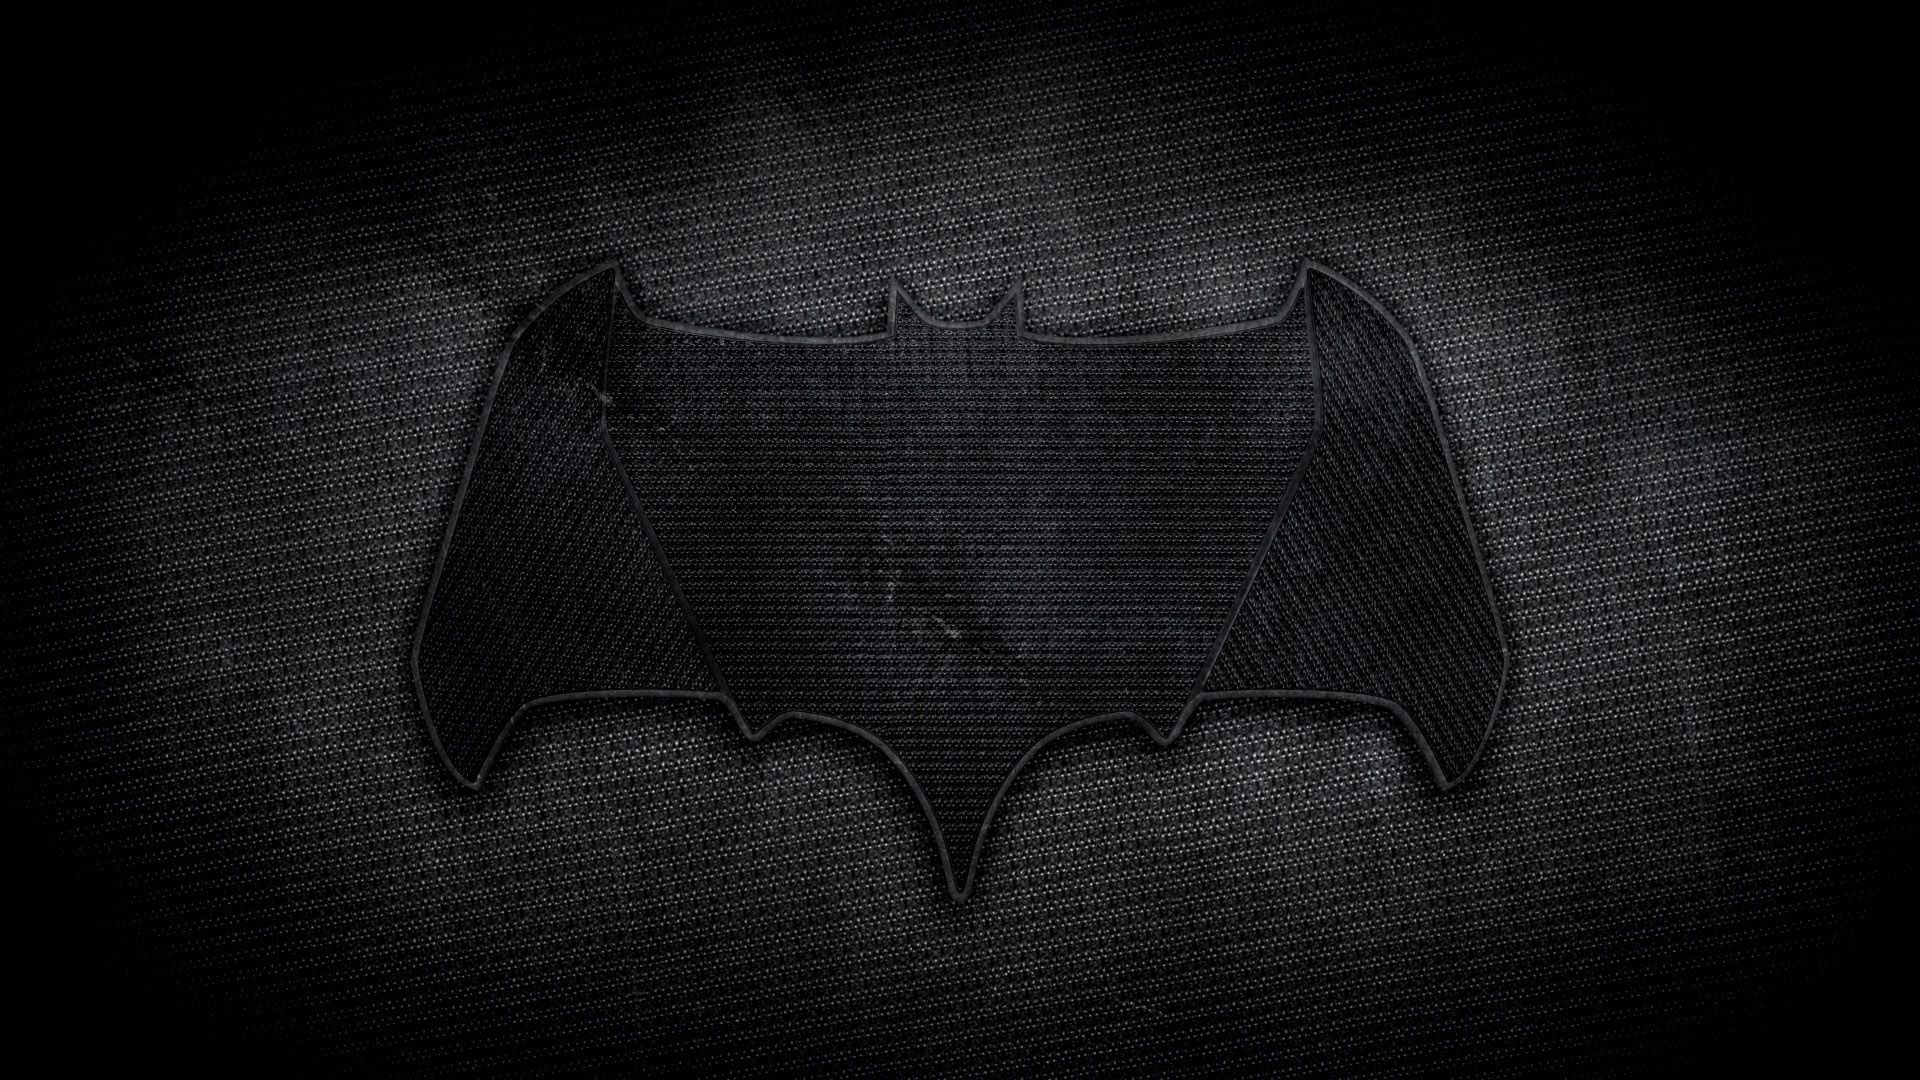 batman-logo-wallpaper-for-desktop-1080p-132.jpg